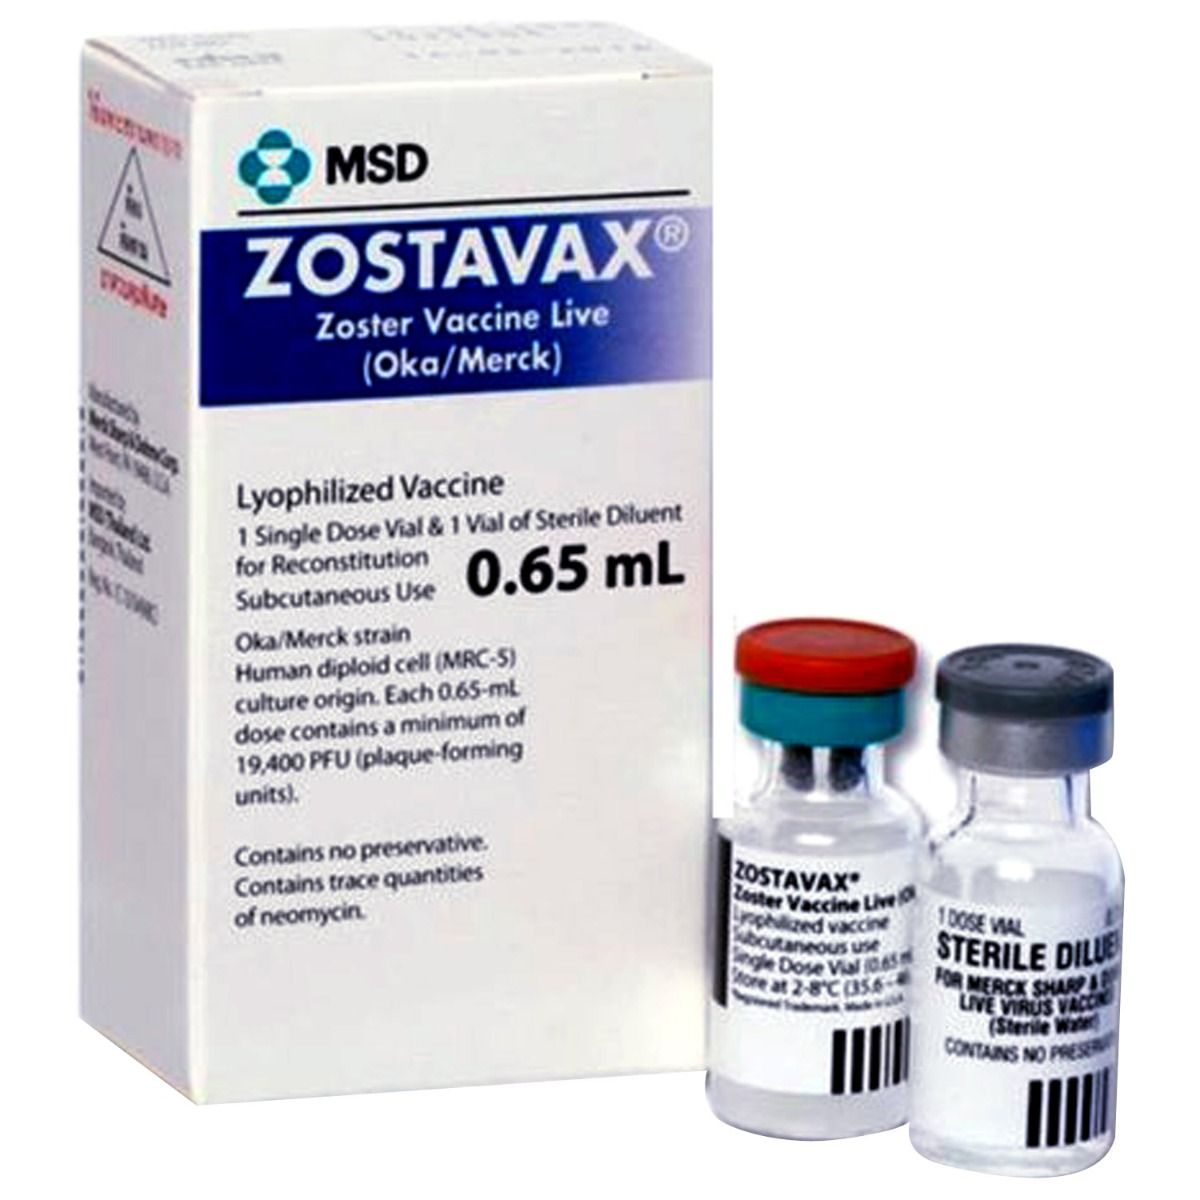 Buy Zostavax Vaccine 0.65 ml Online